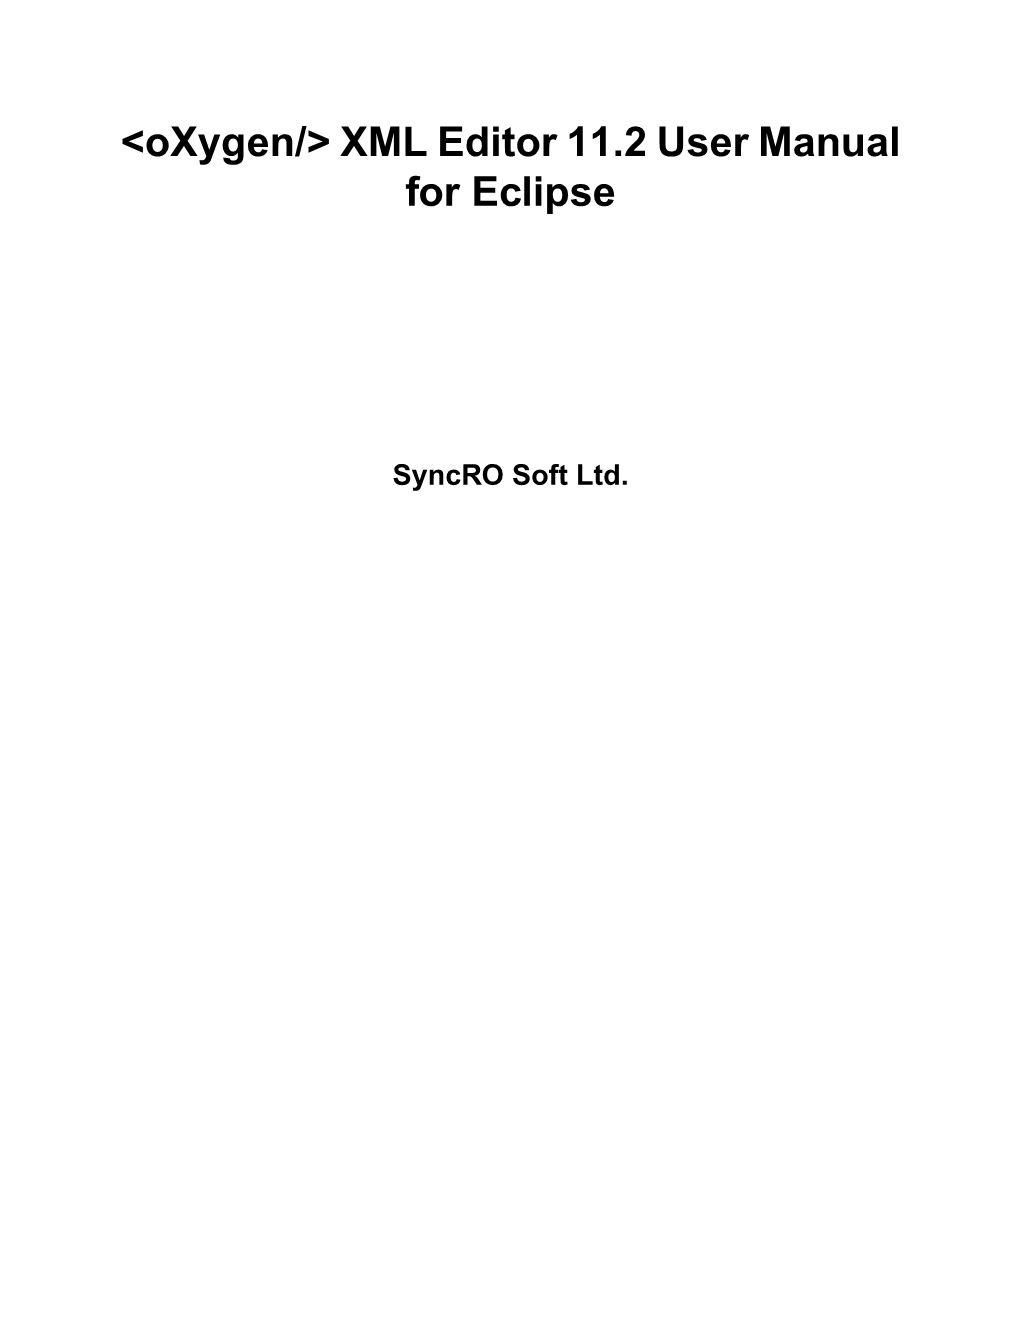 &lt;Oxygen/&gt; XML Editor 11.2 User Manual for Eclipse